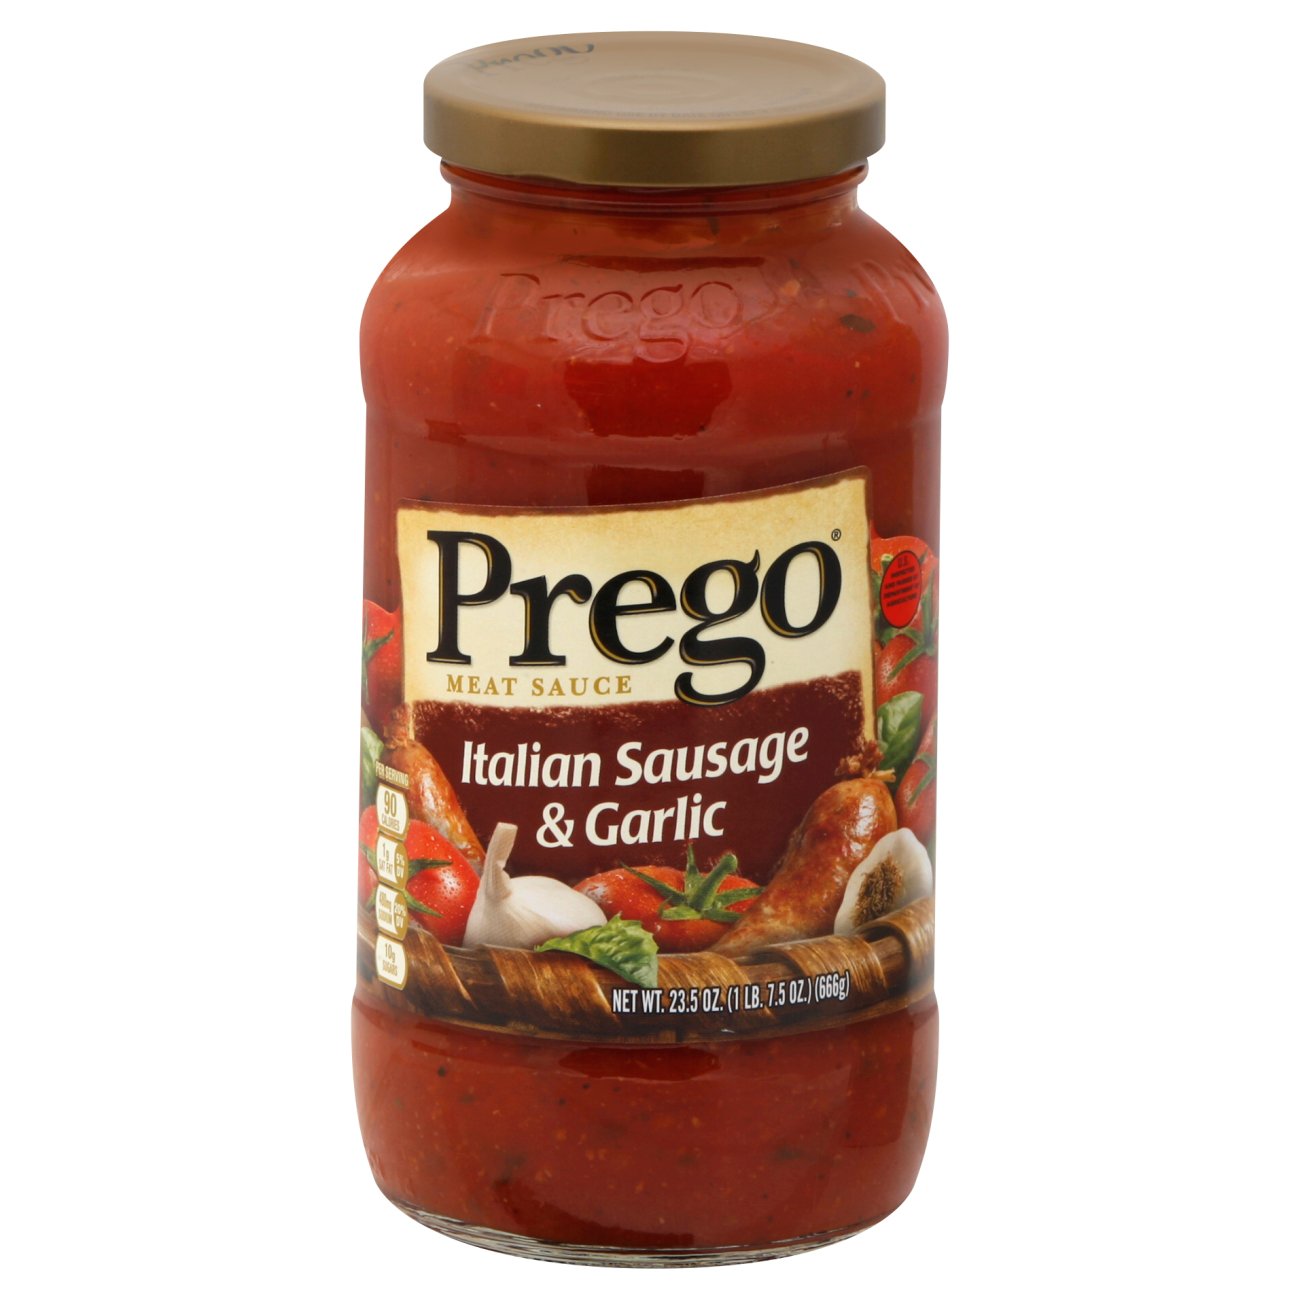 Prego Italian Sausage & Garlic Meat Sauce - Shop Pasta ...